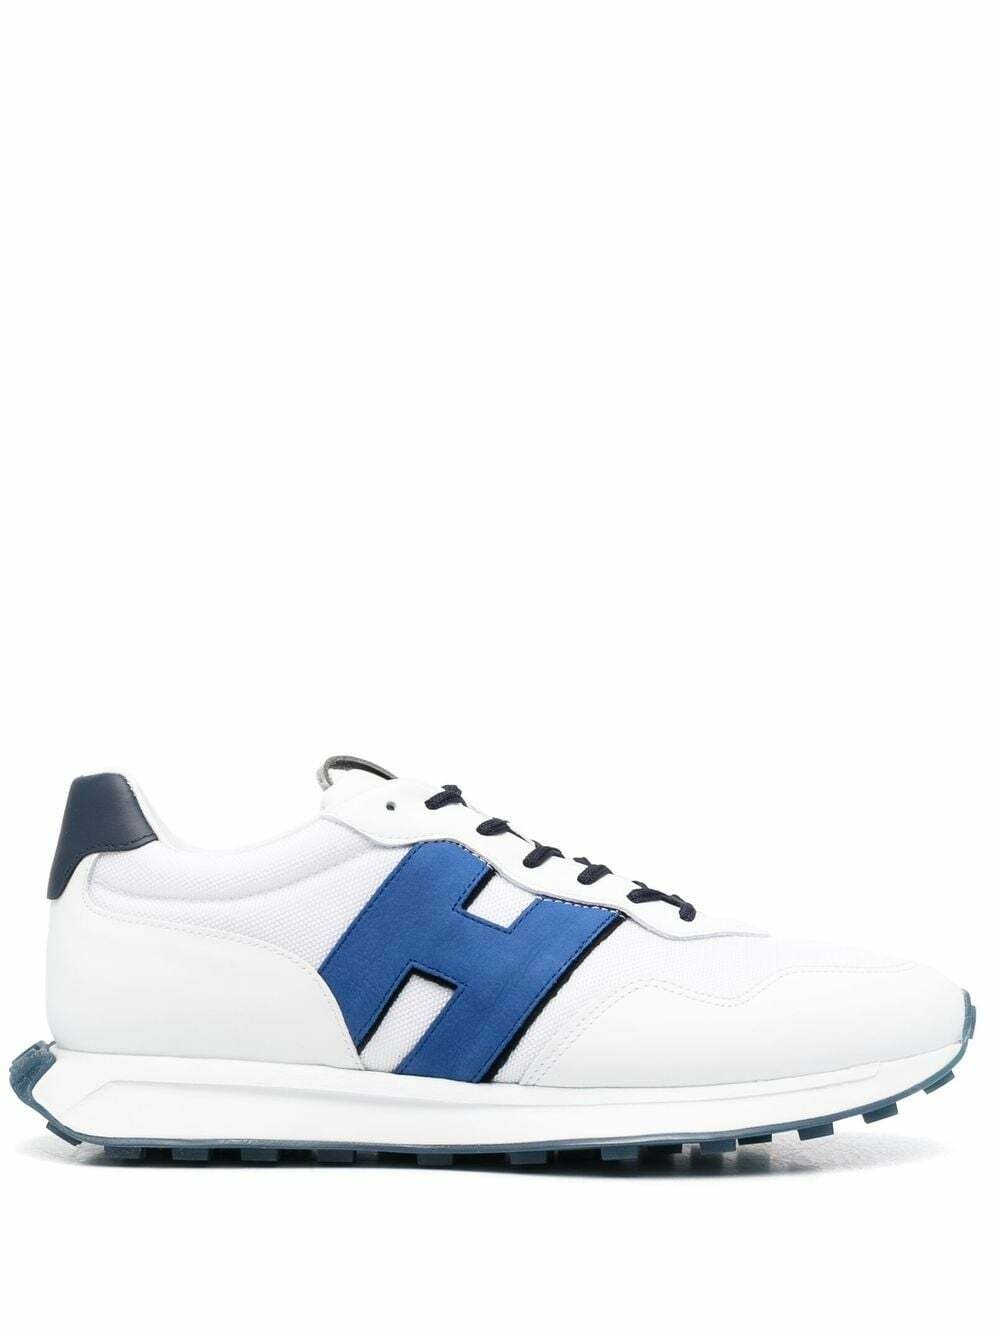 HOGAN - H601 Sneakers Hogan